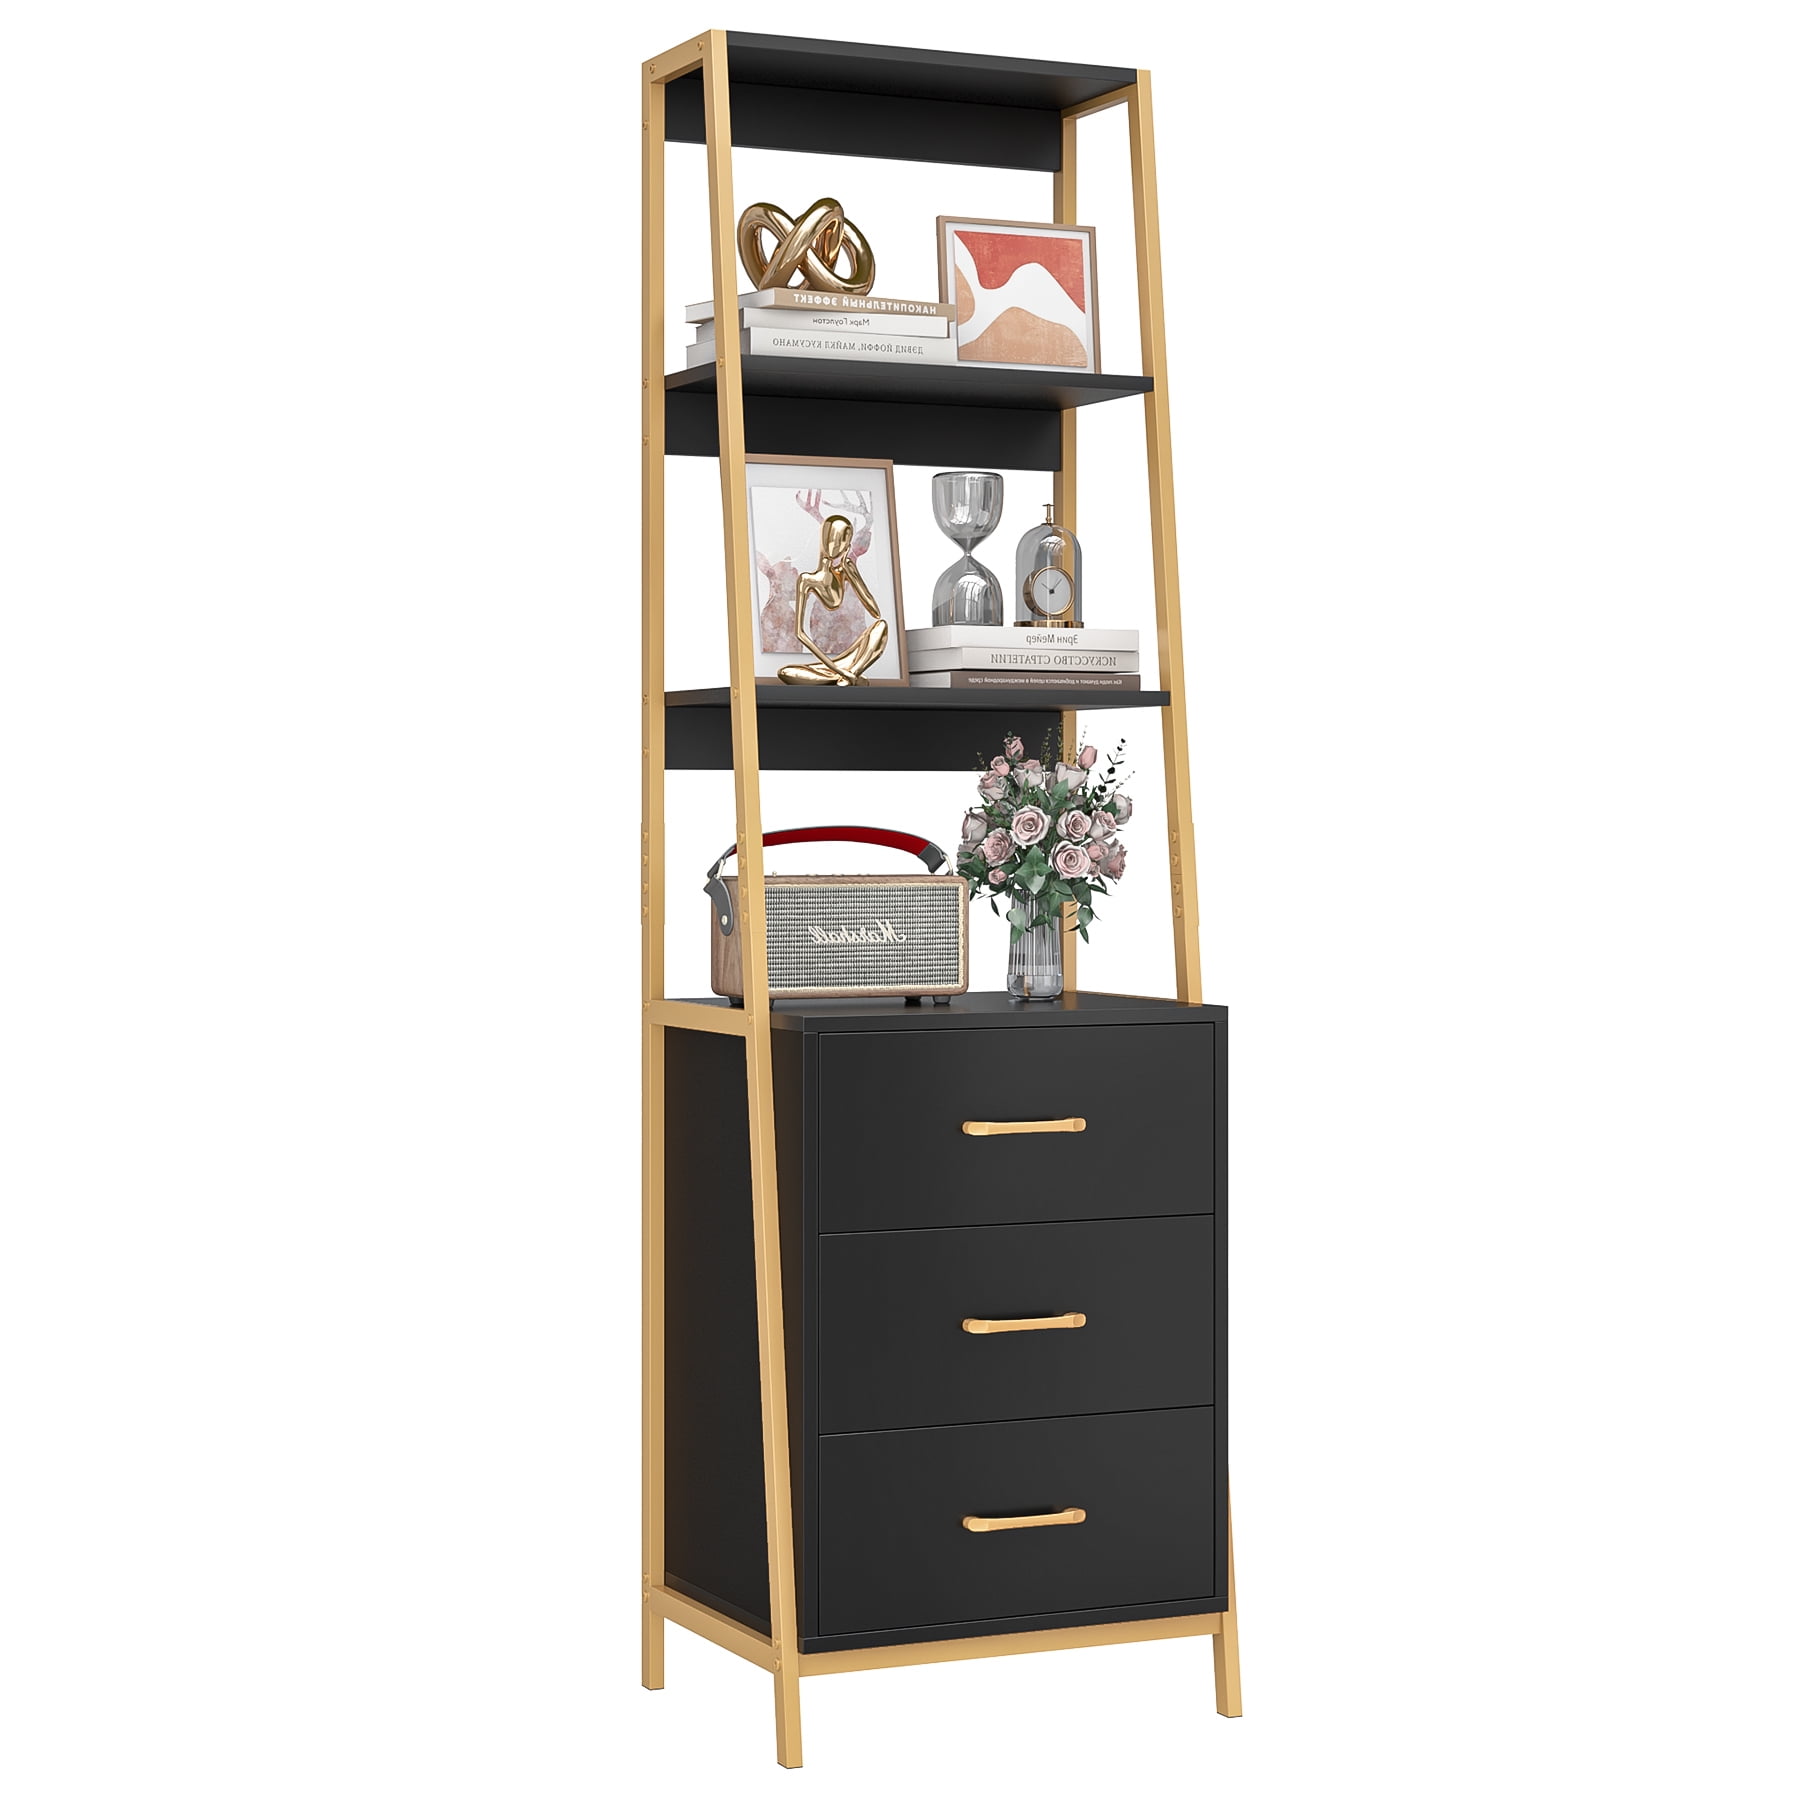 Hombazaar 3-Tier Bookshelf, Rustic Industrial Style Bookcase Furniture, Free Standing Storage Shelves for Living Room Bedroom